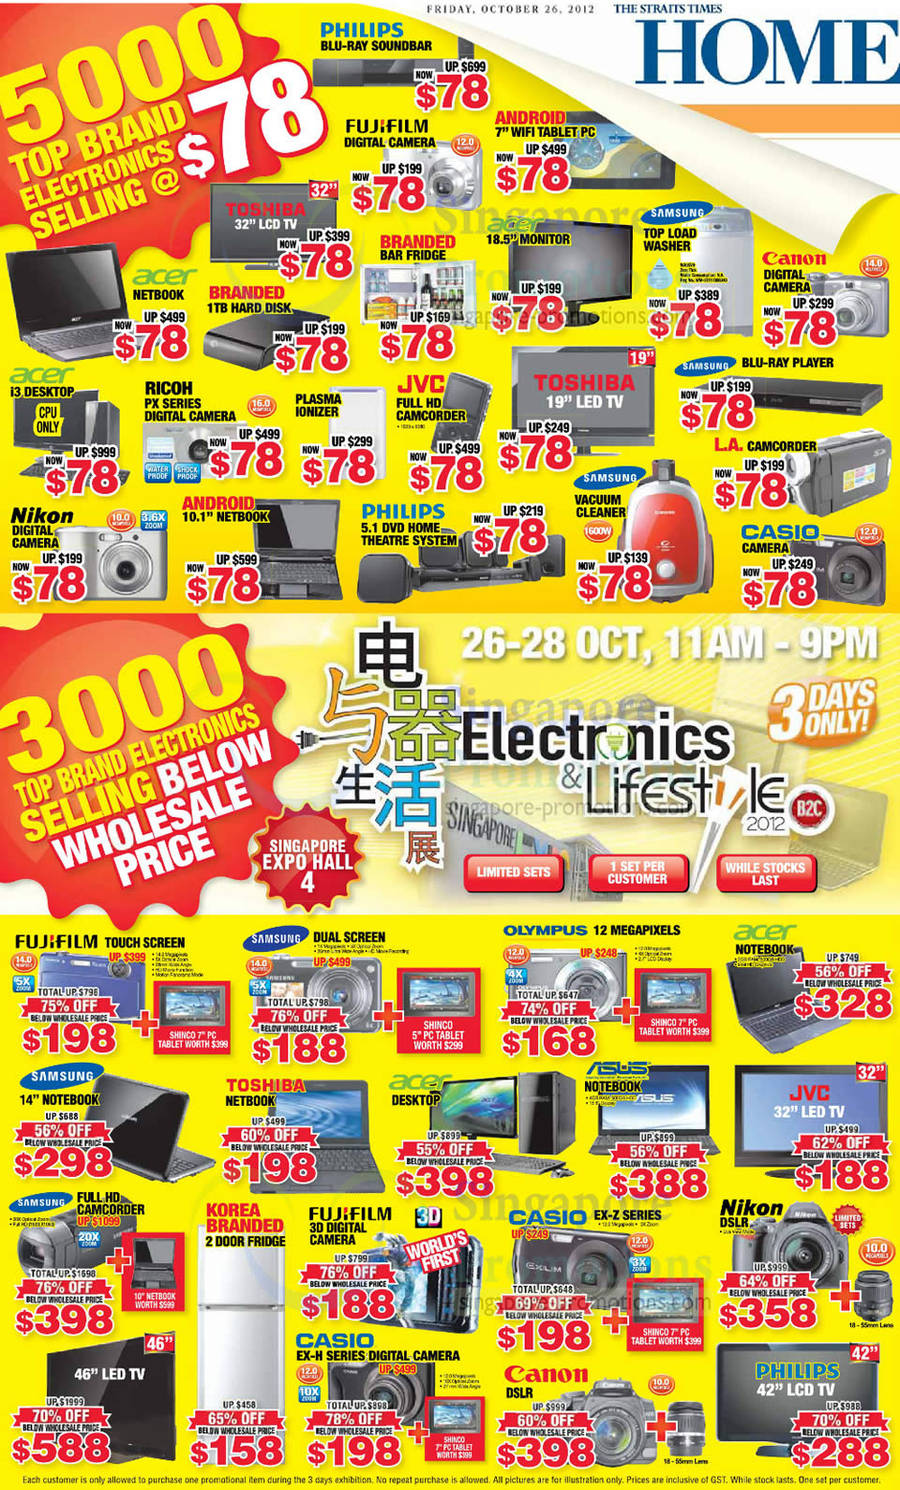 26 Oct 5000 78 Dollar Deals, 3000 Electronics Sale below wholesale price